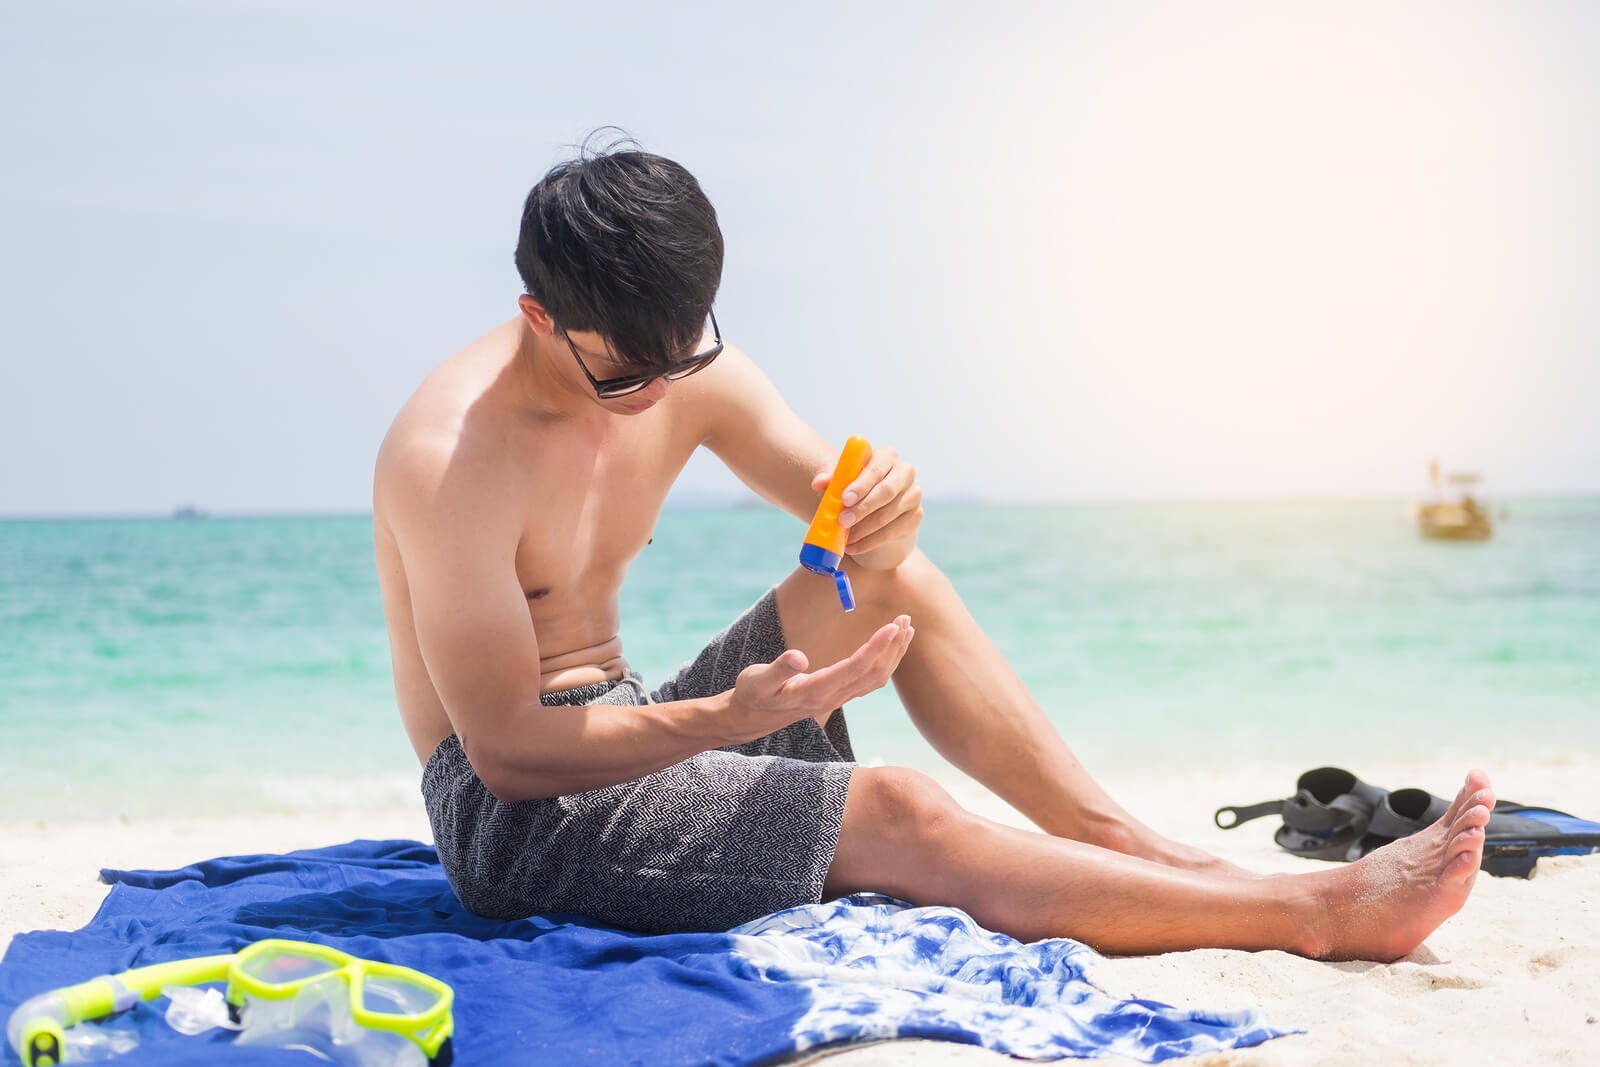 Man applying sunscreen at the beach